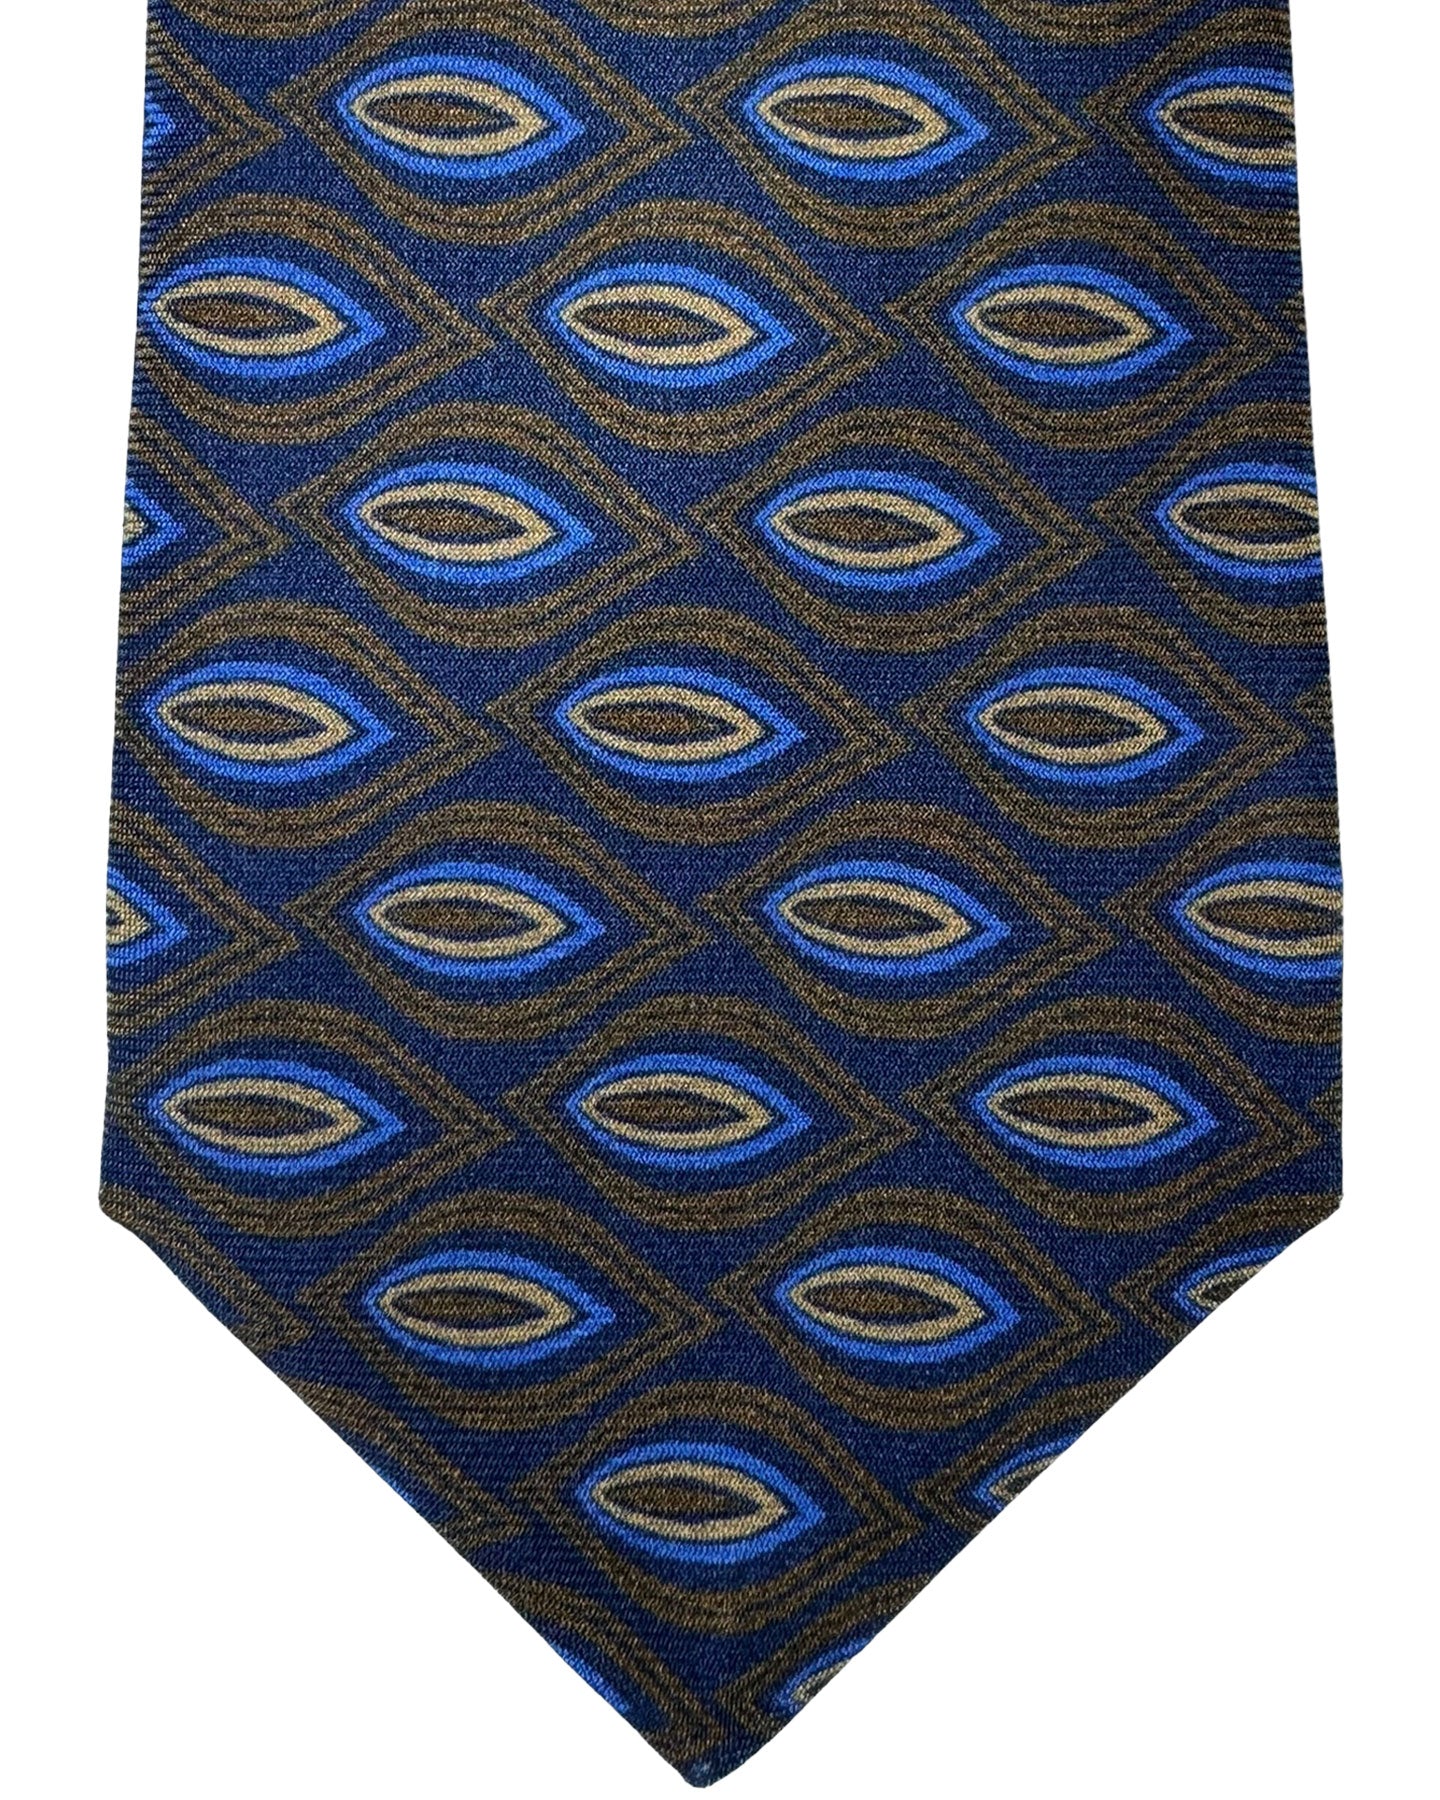 Kiton Tie Yellow Brown Navy Geometric - Sevenfold Necktie